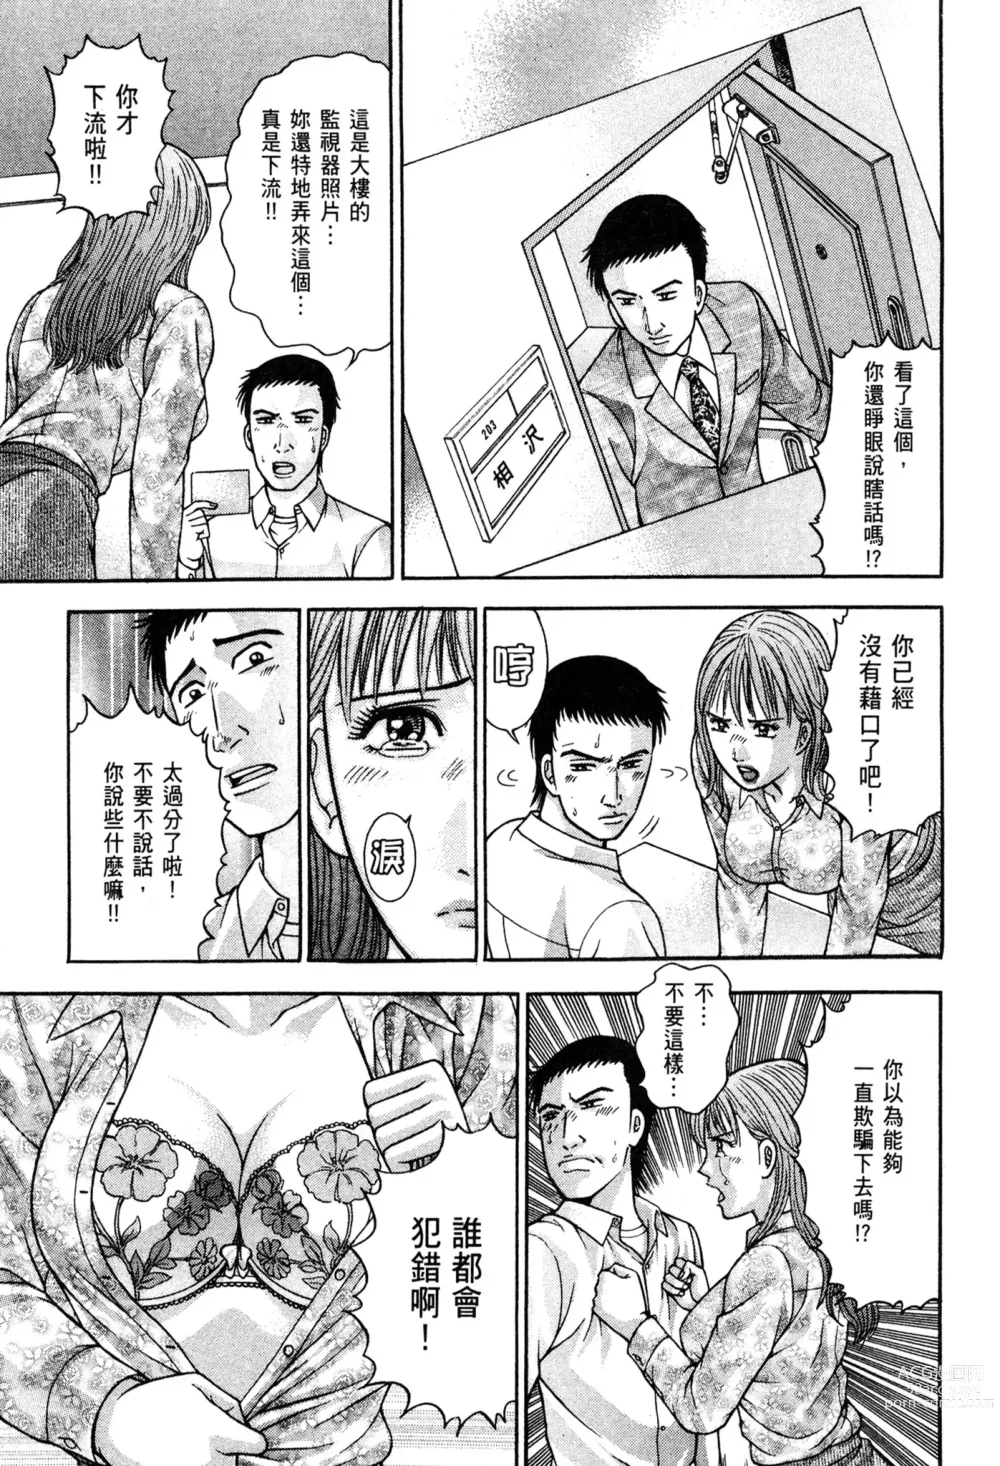 Page 7 of manga 現代美人妻圖鑑